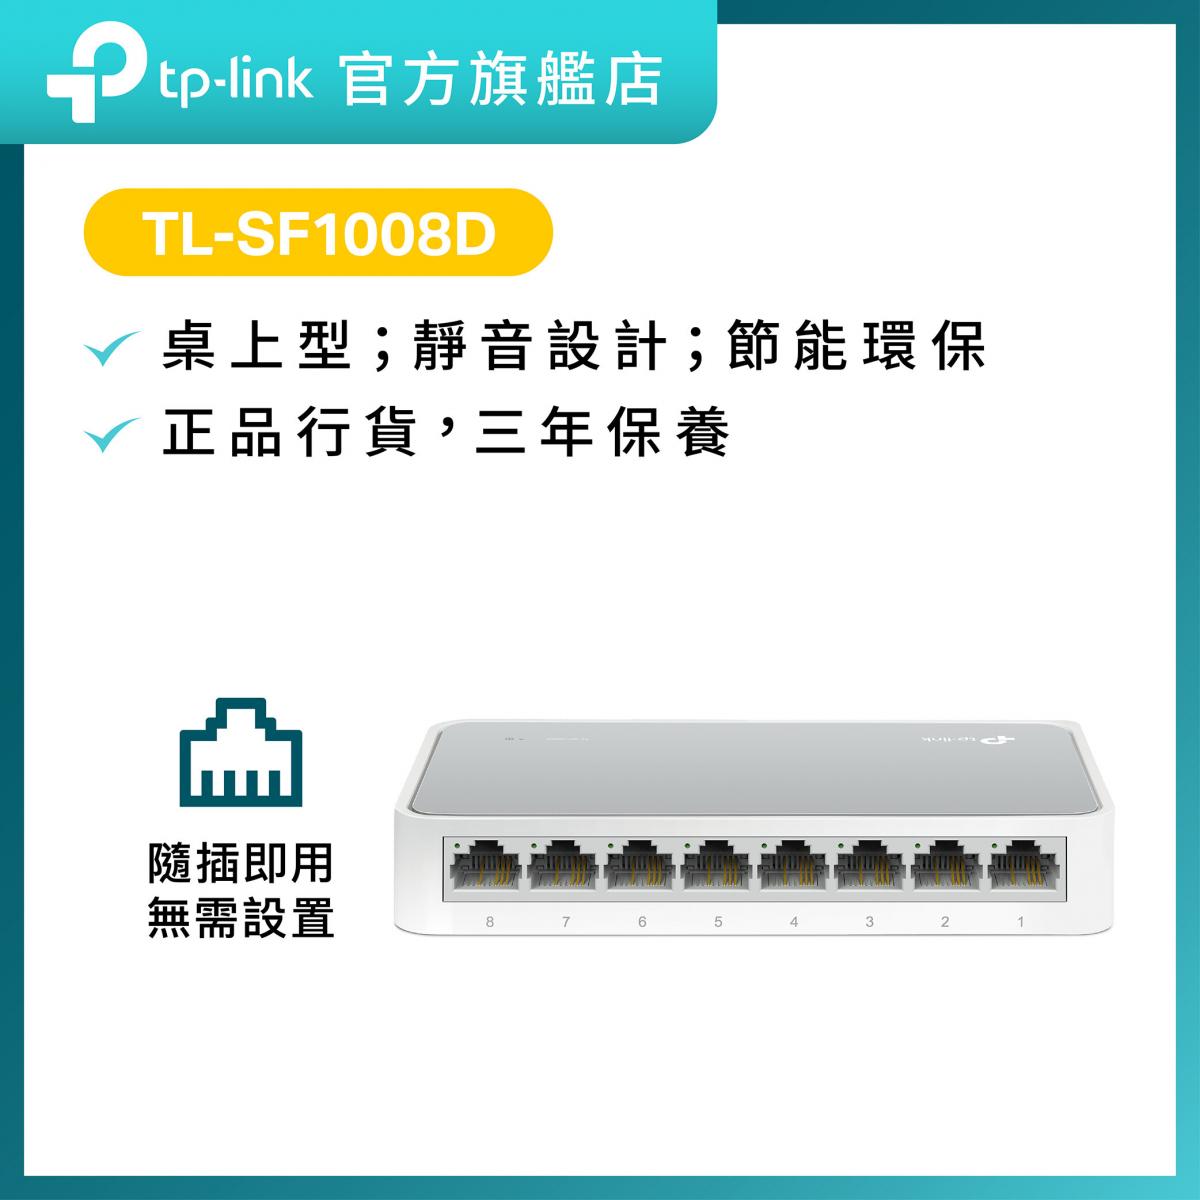 TL-SF1008D 8 埠 10/100Mbps 桌上型交換機